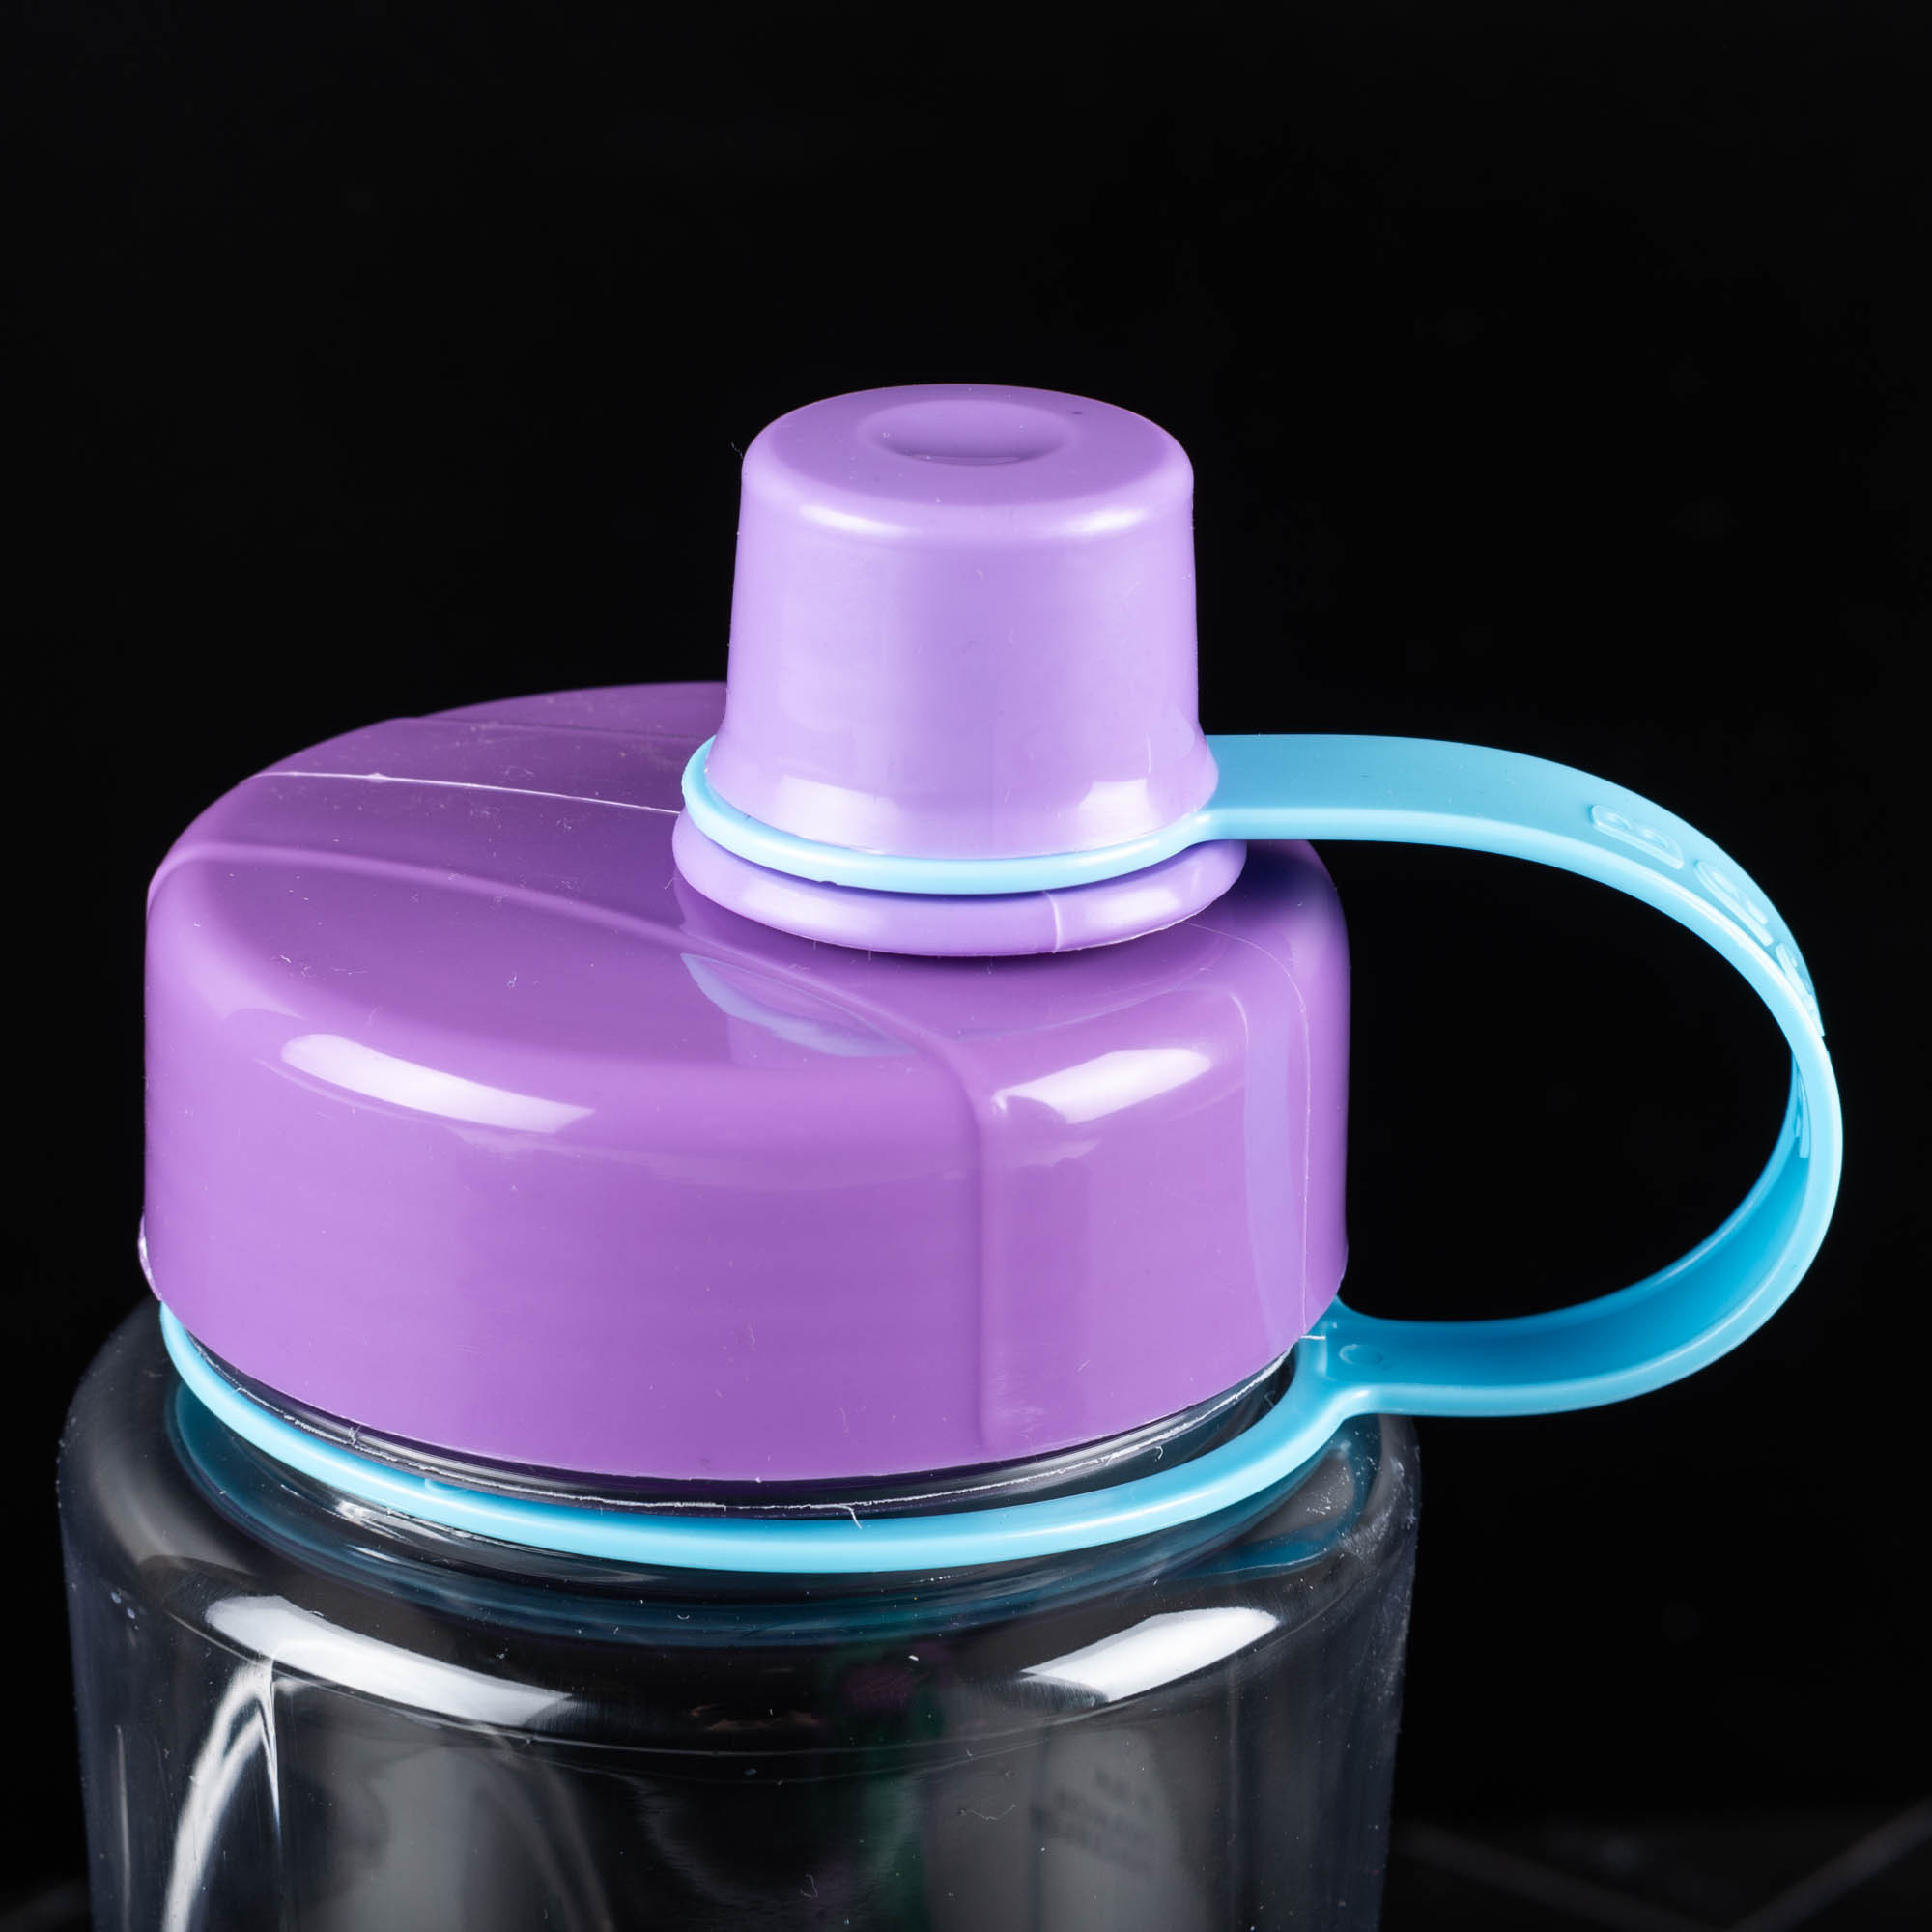 Botella 1 litro surtido de colores